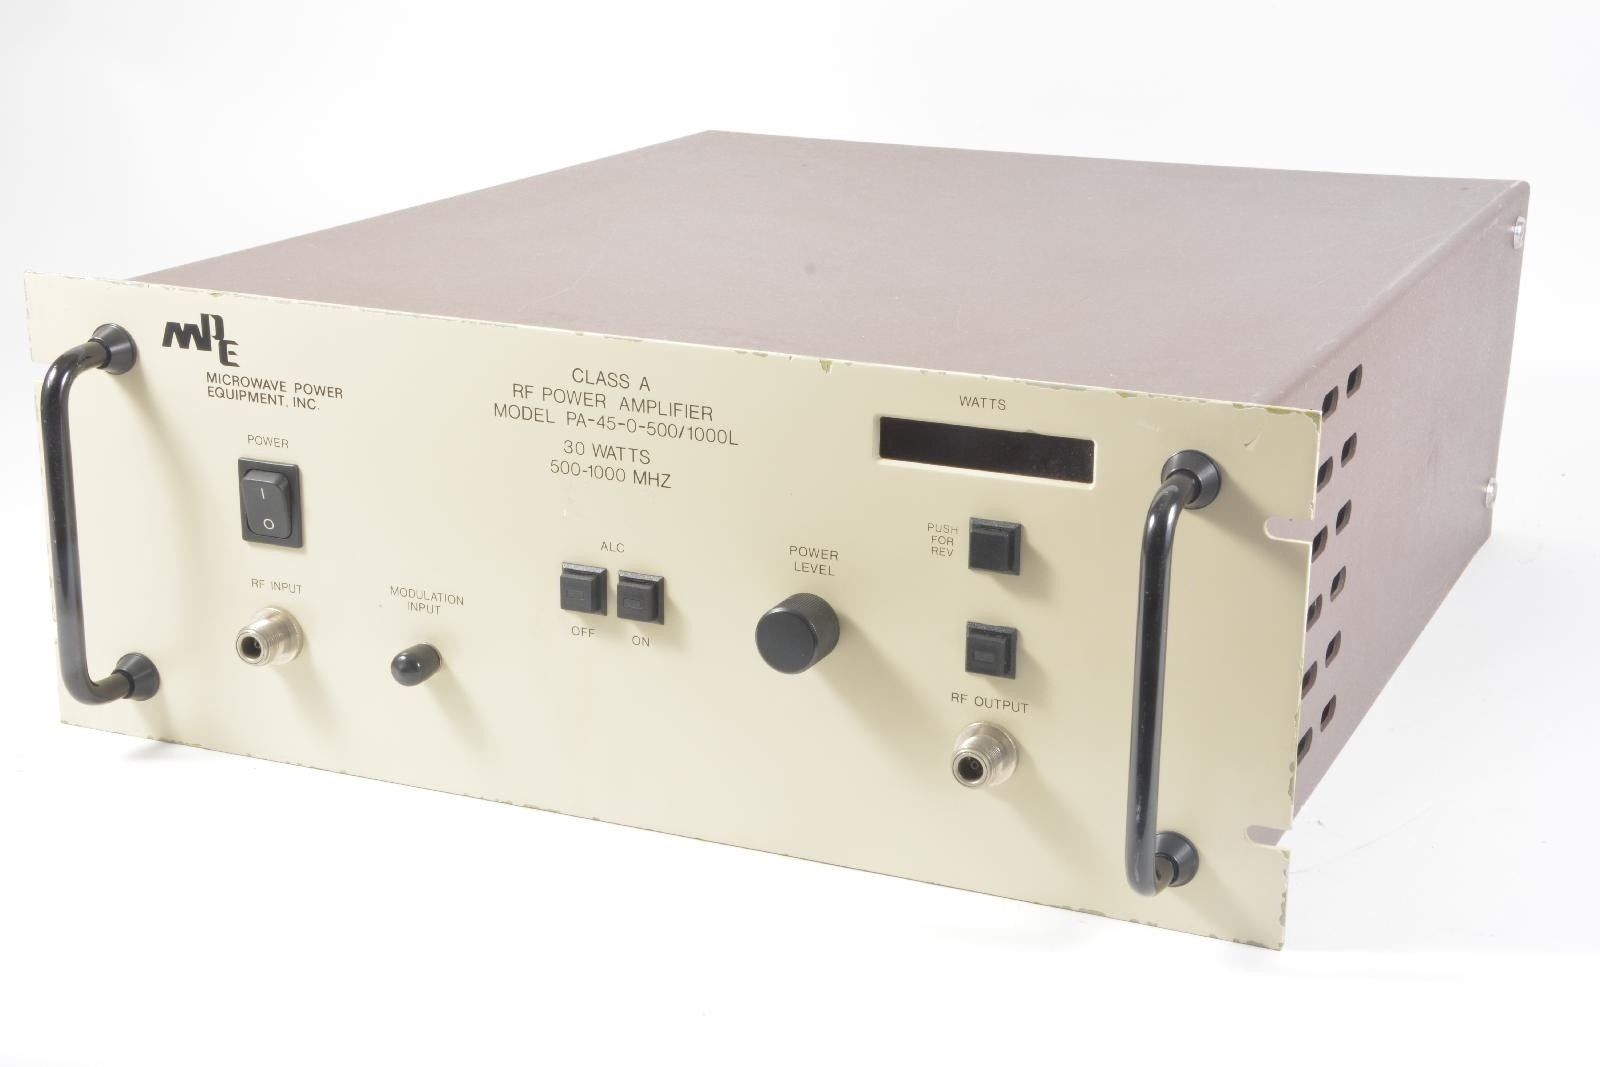 power-amplifier-mpe-class-a-rf-pa-45-0-500-1000l-30-watts-500-1000-mhz-used-equipment-0.jpg